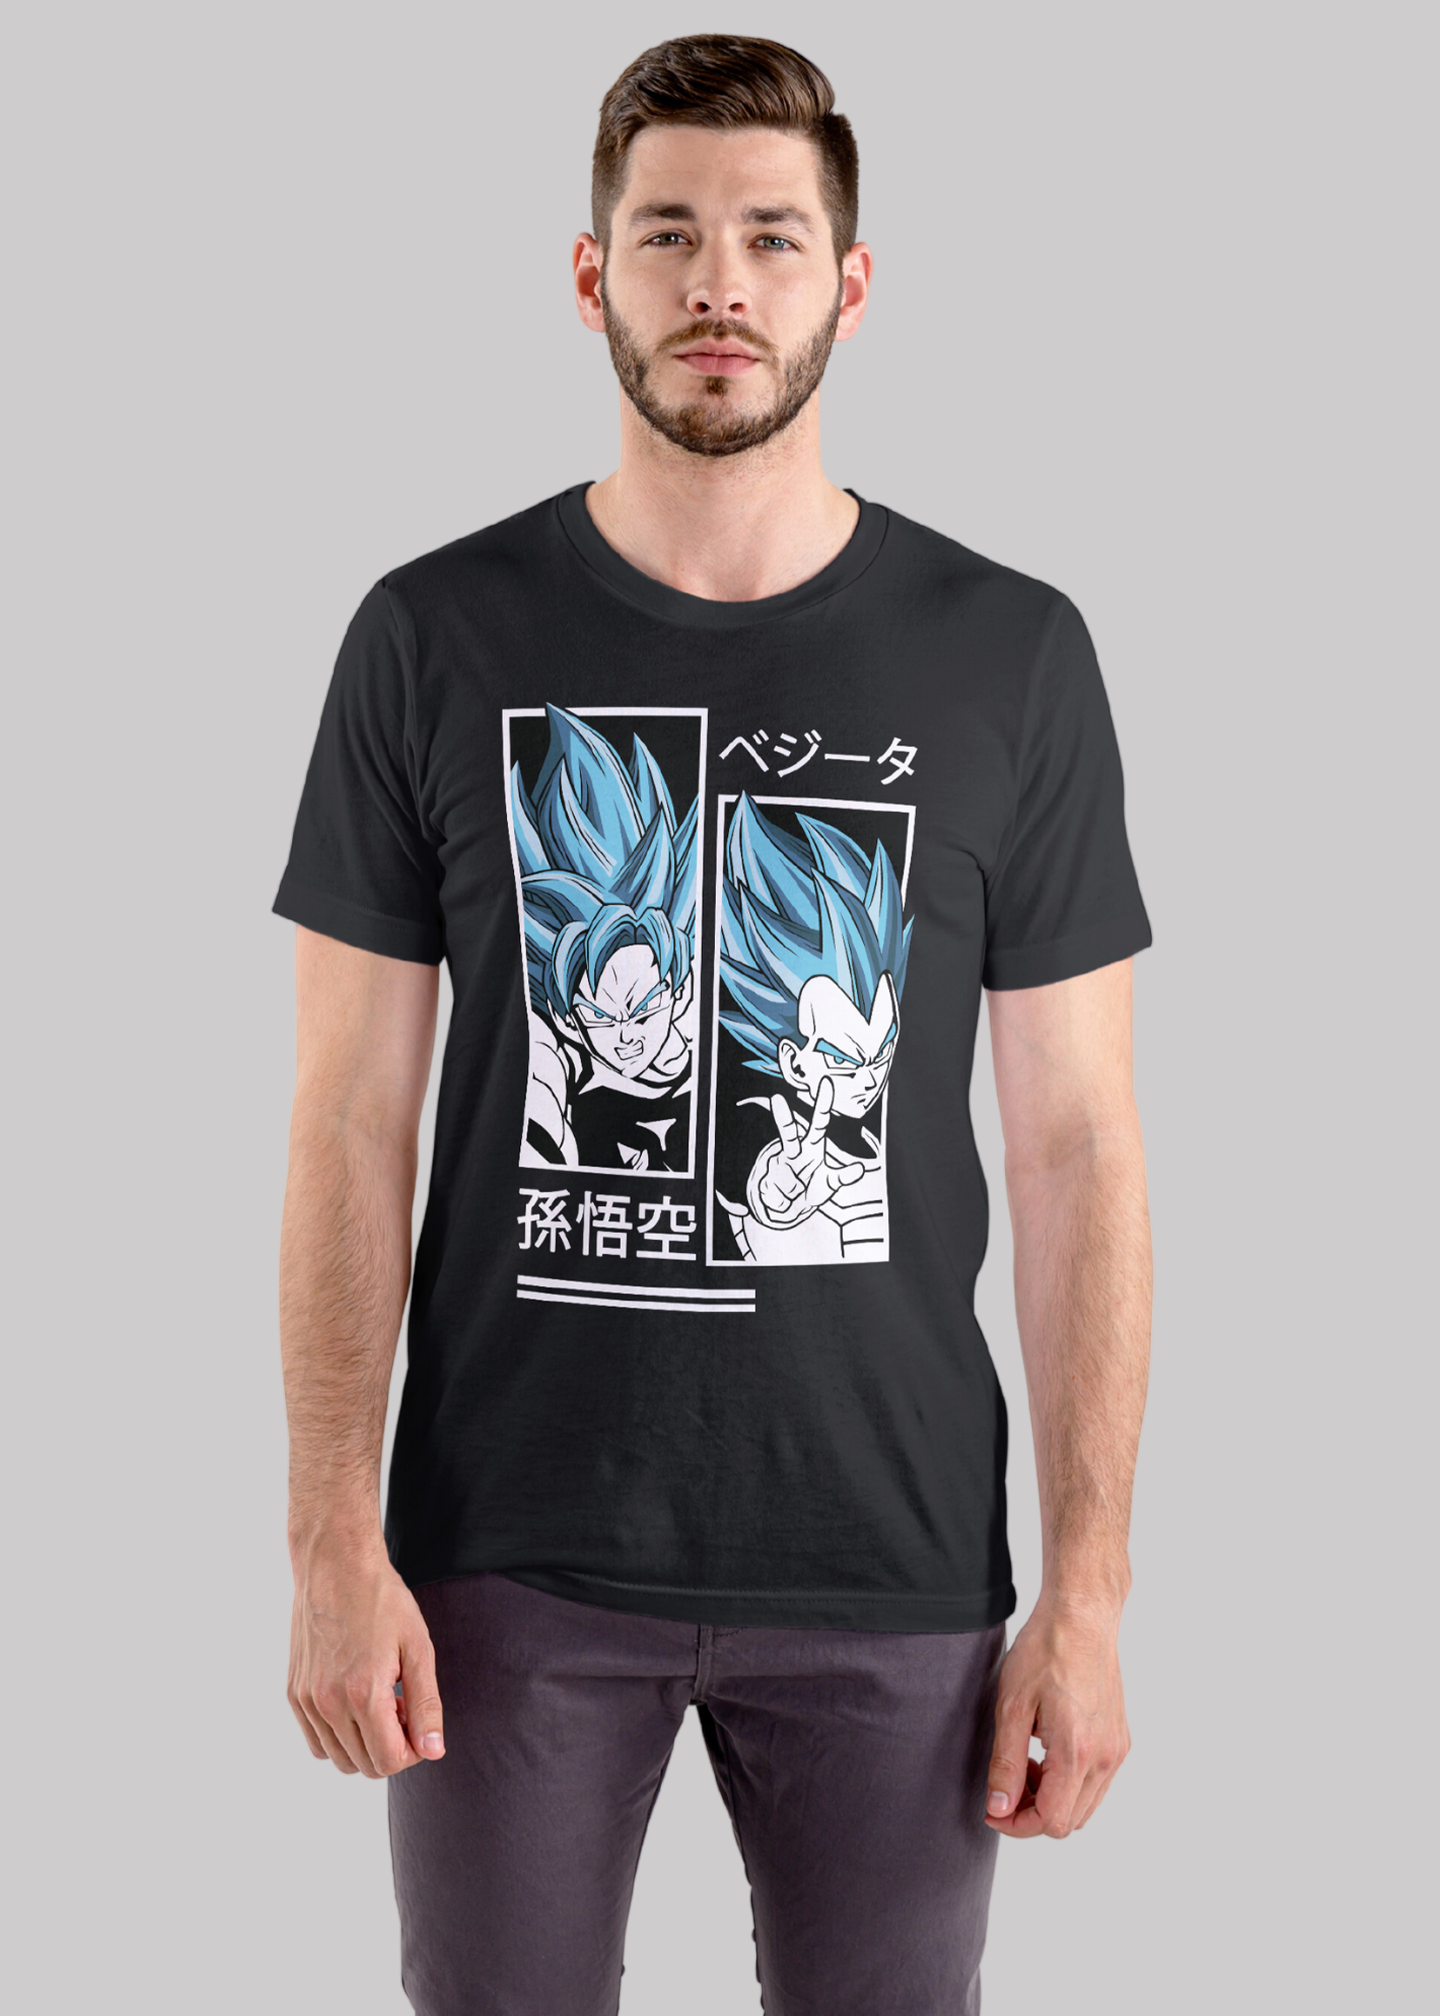 Anime Printed Half Sleeve Premium Cotton T-shirt For Men